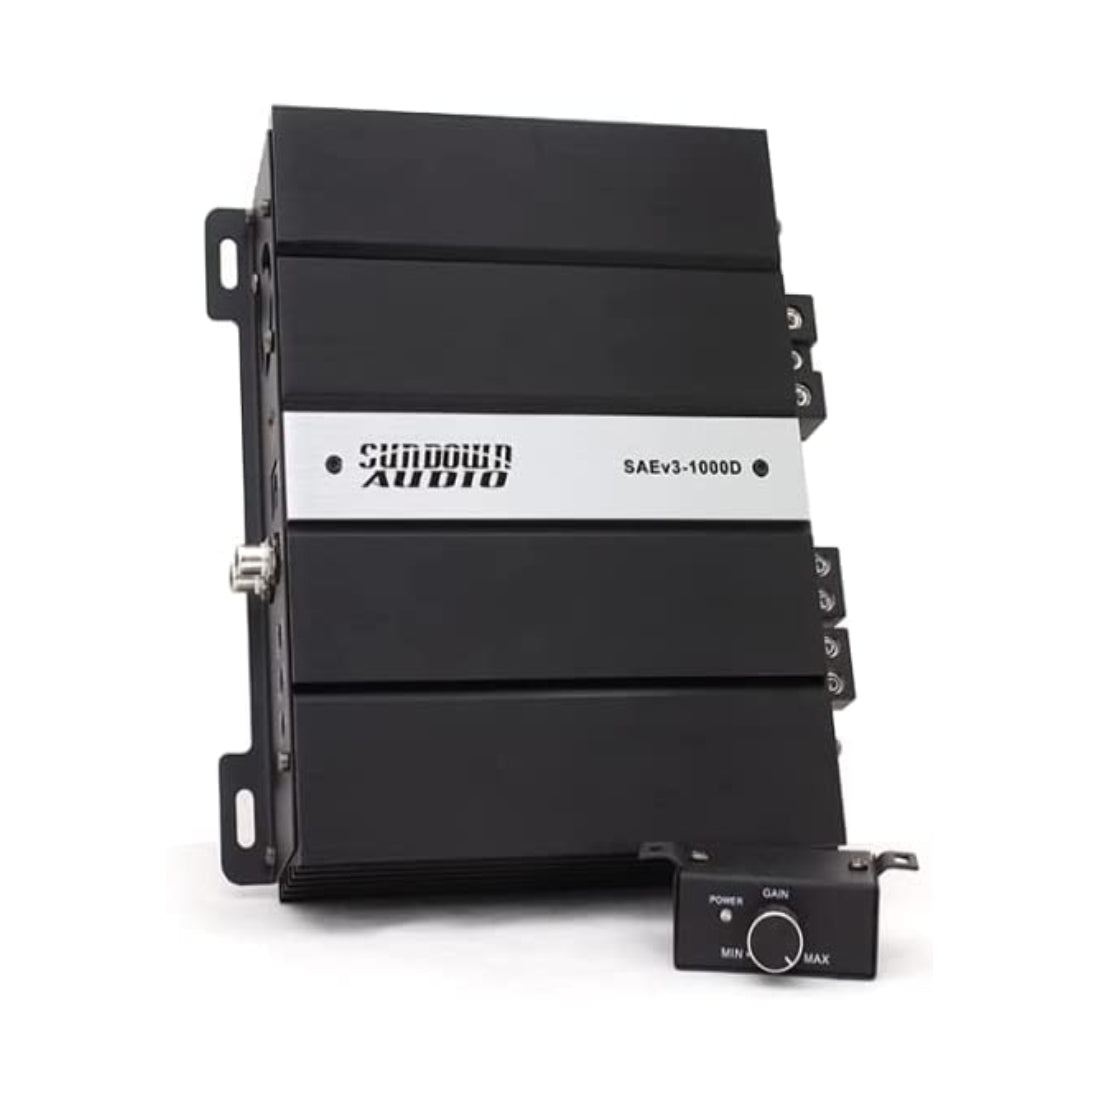 Sundown Audio SAEV3-1000D 1000W RMS Monoblock Digital Class-D Car Amplifier